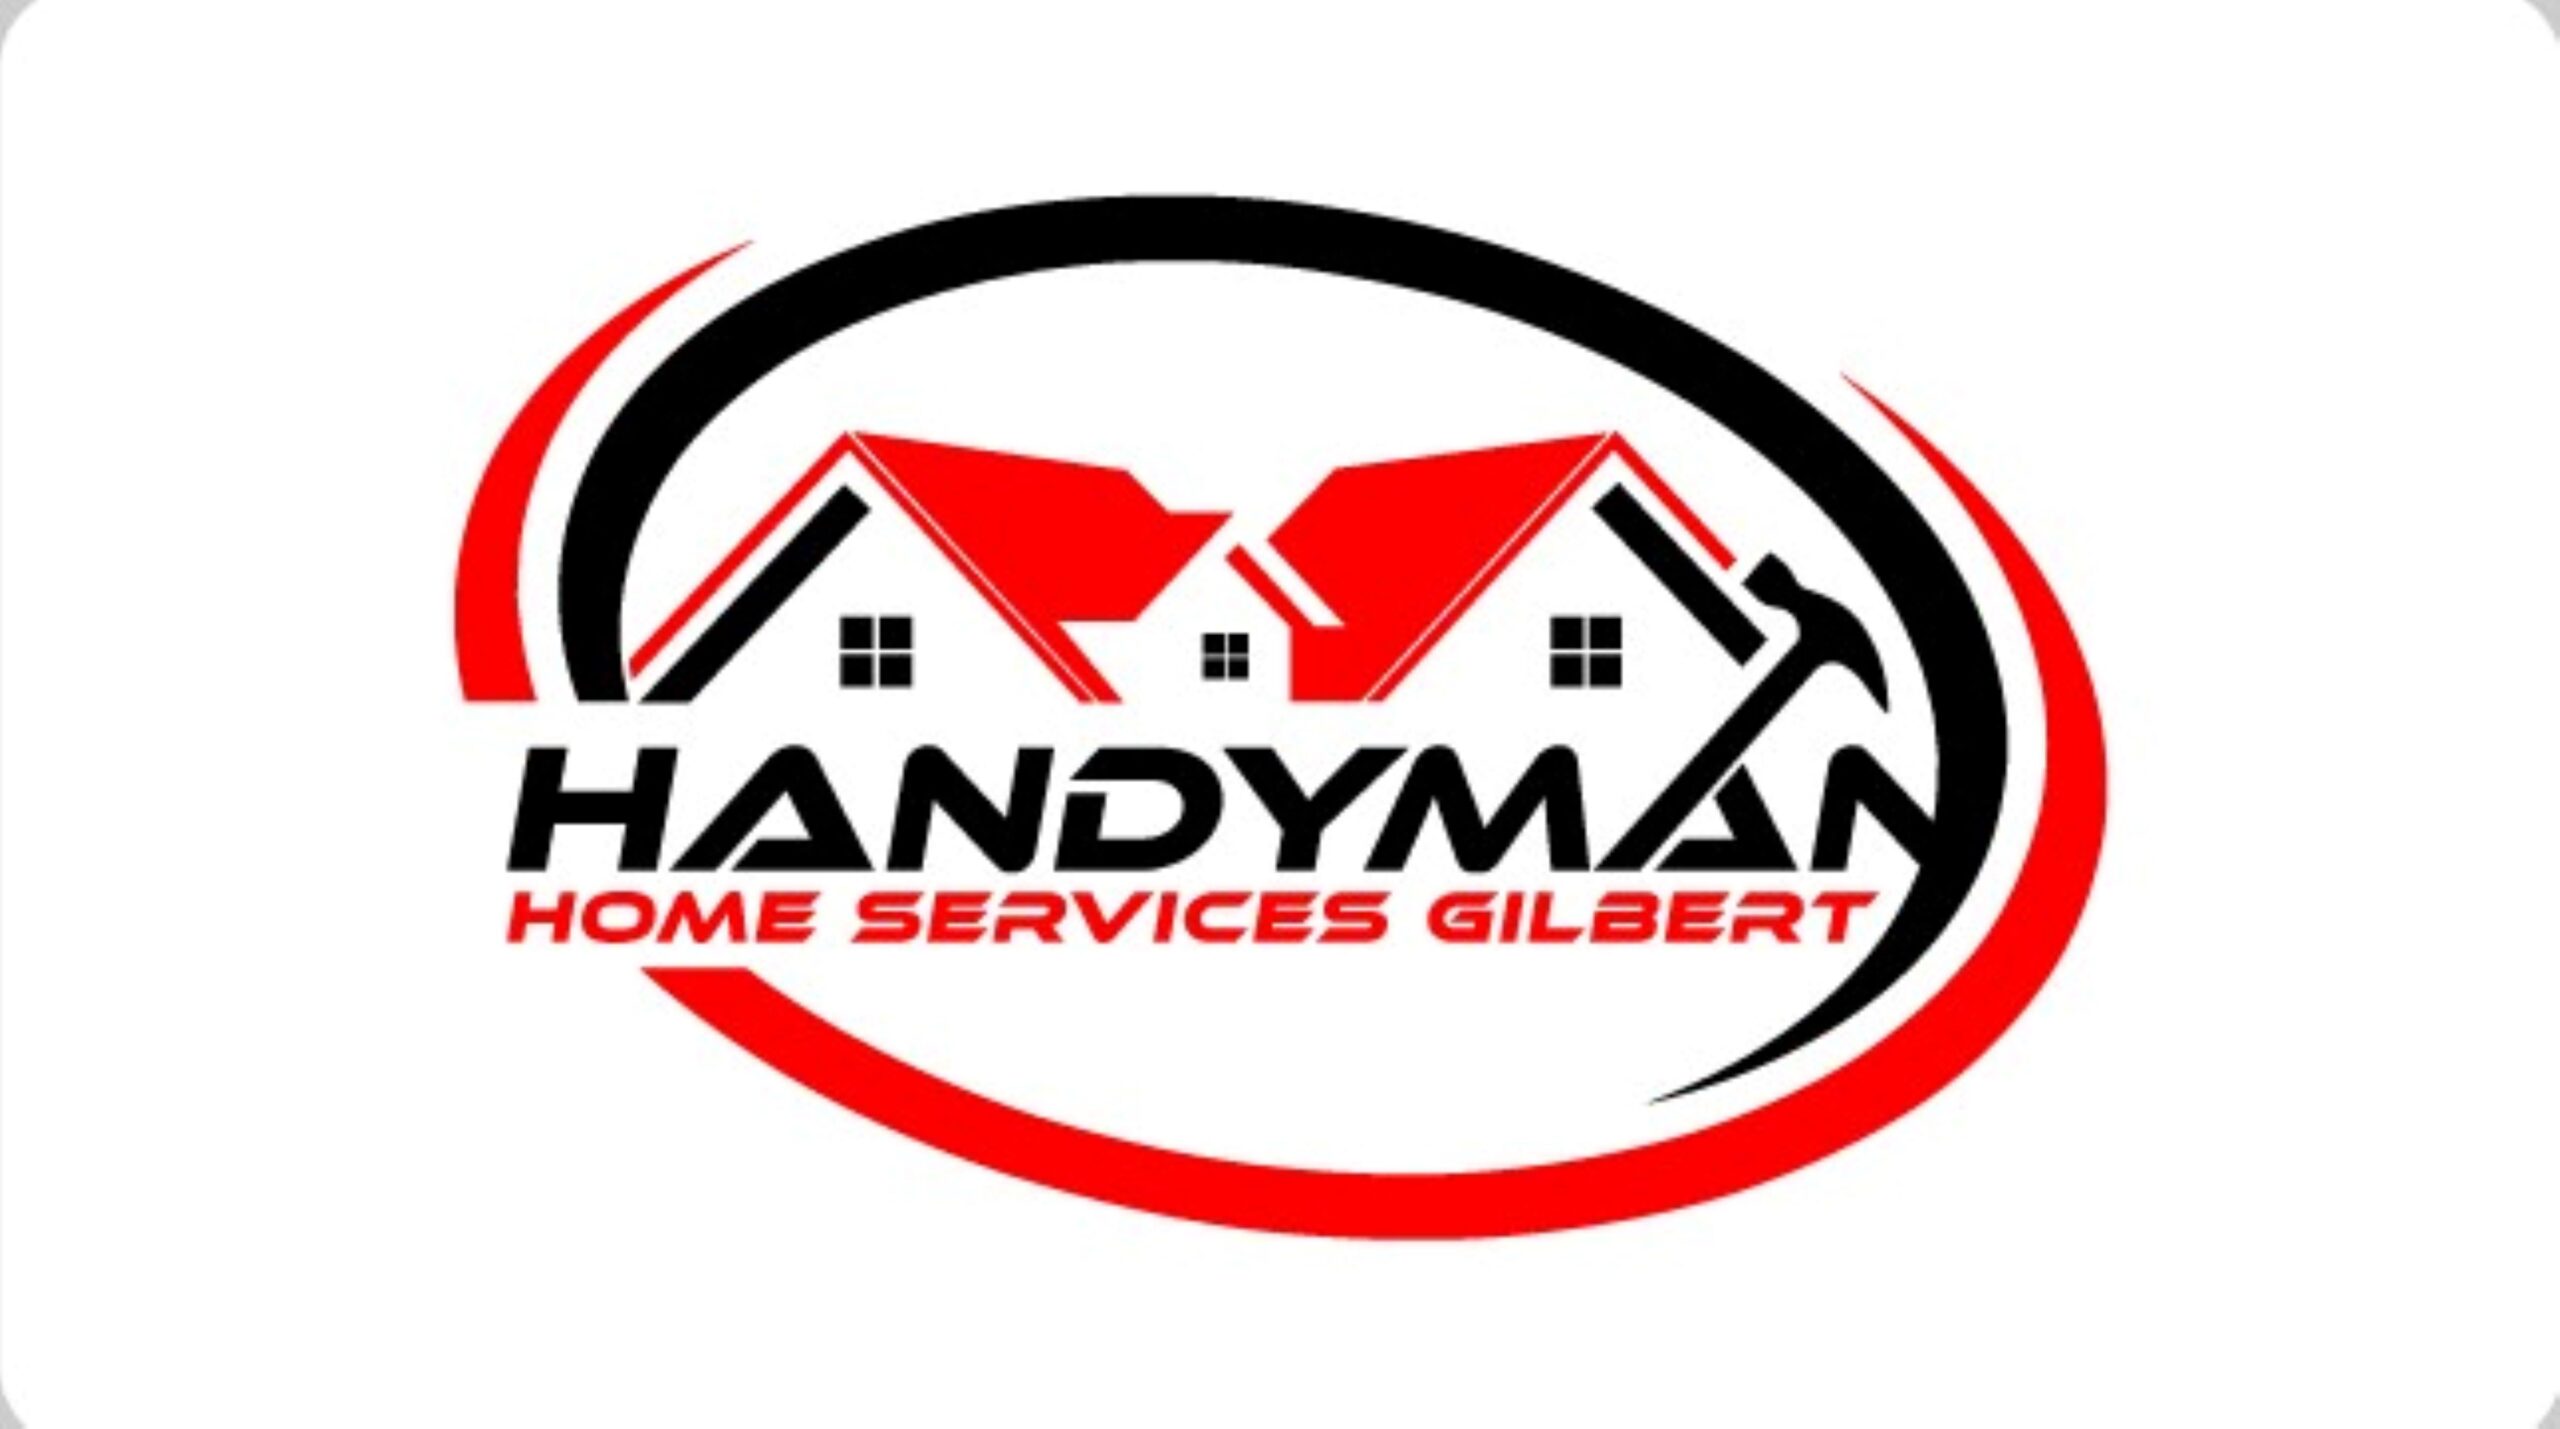 Handyman Home Services Gilbert